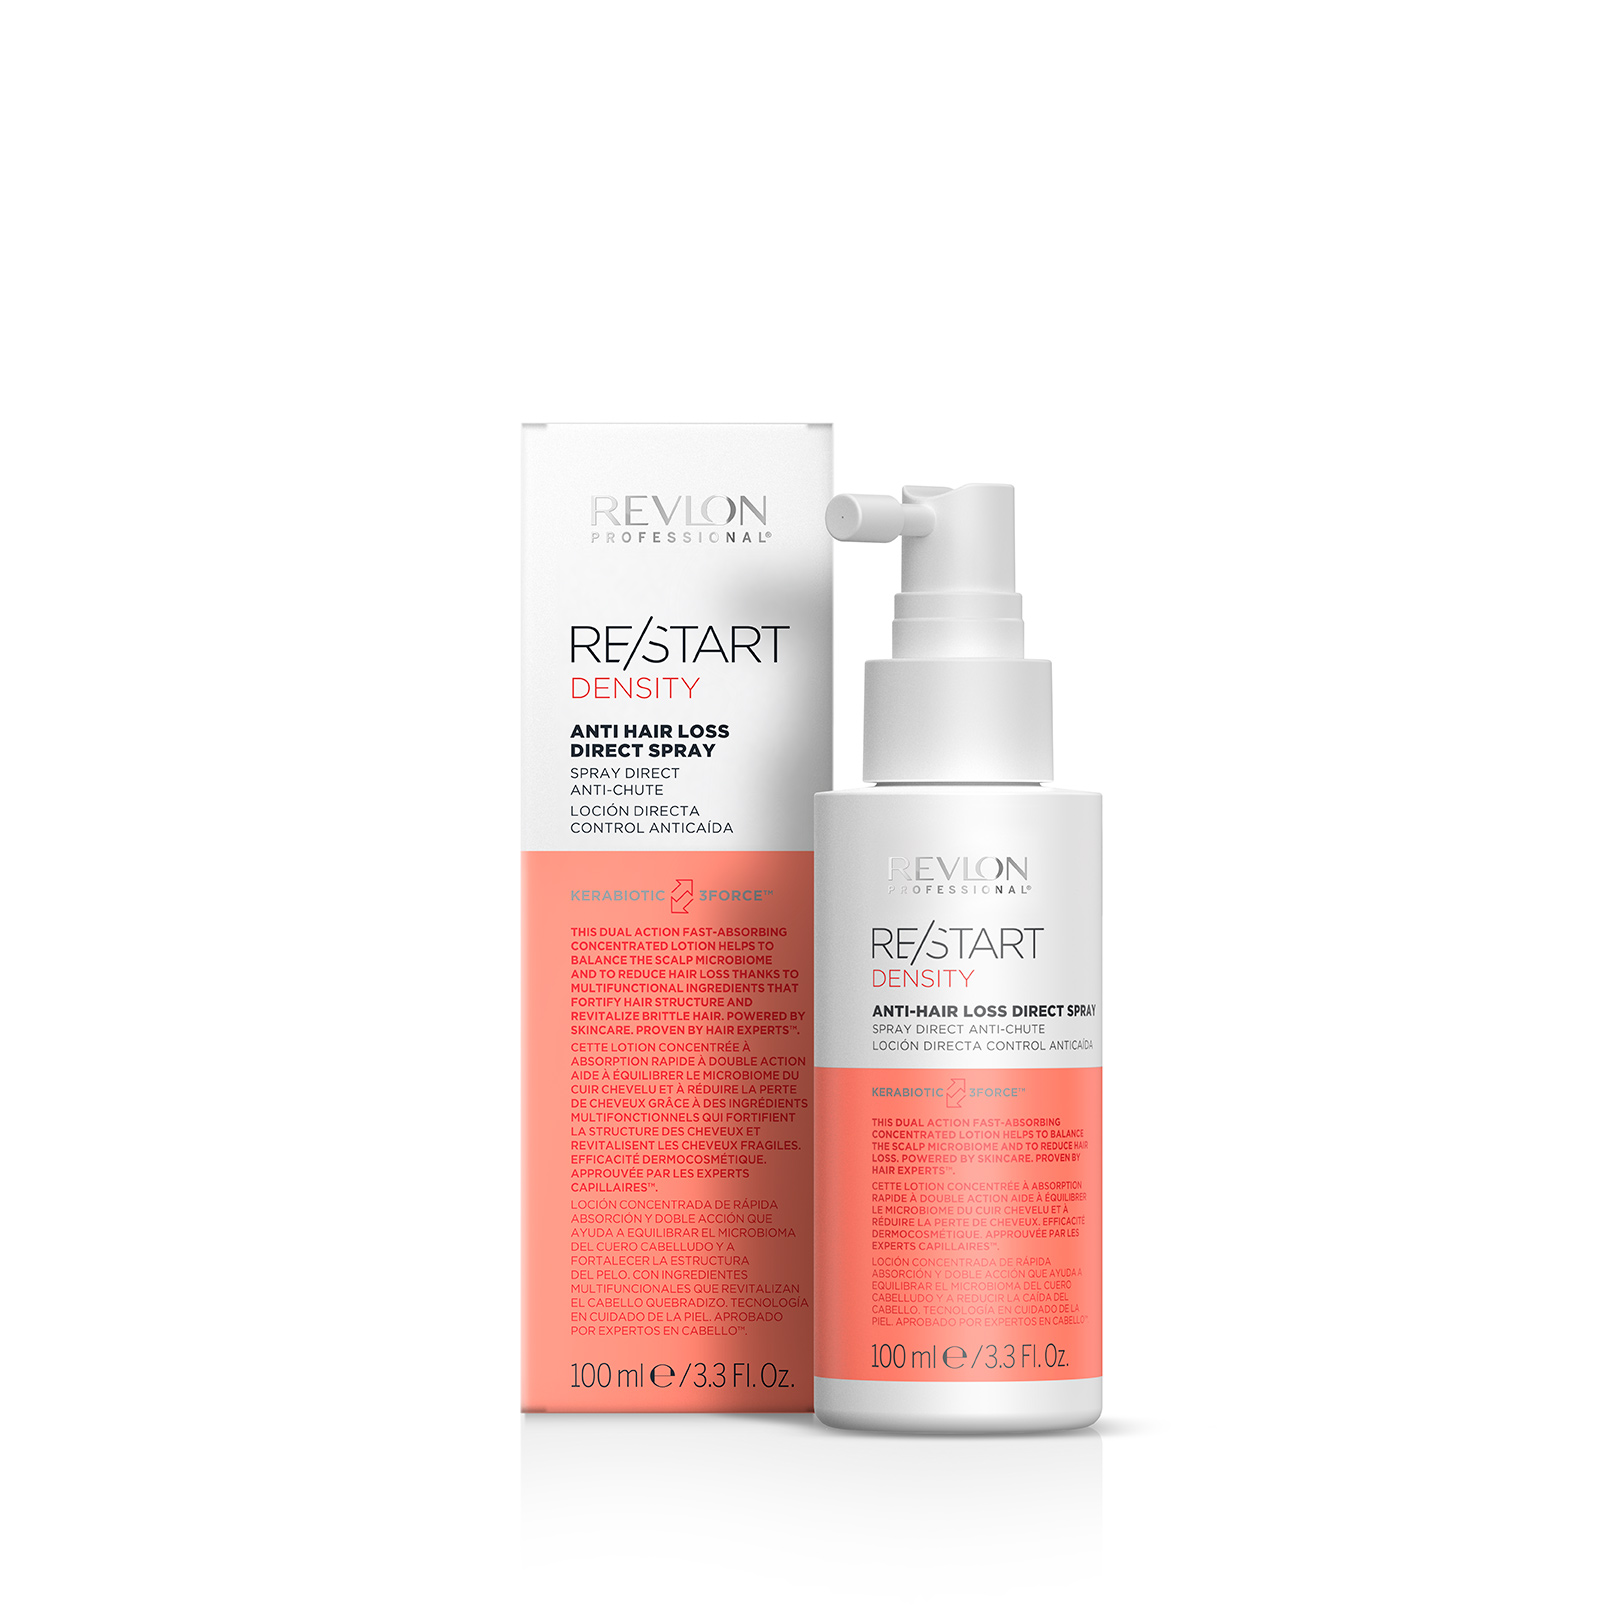 RE/START™ Density Anti-Hair Loss Direct Spray - Revlon Professional